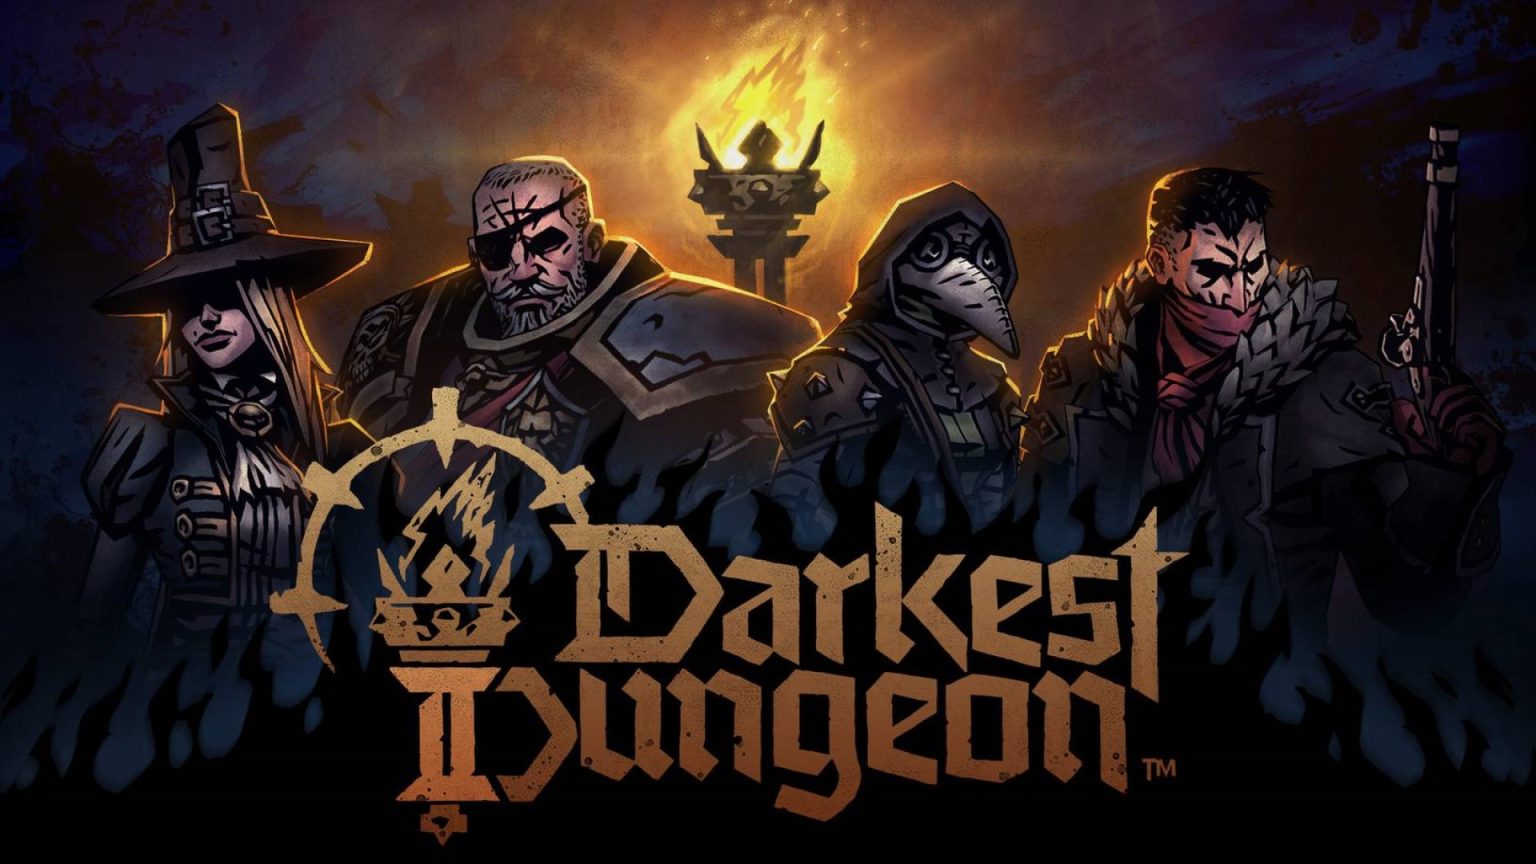 Darkest Dungeon 2 також буде доступна на Nintendo Switch 15-го липня